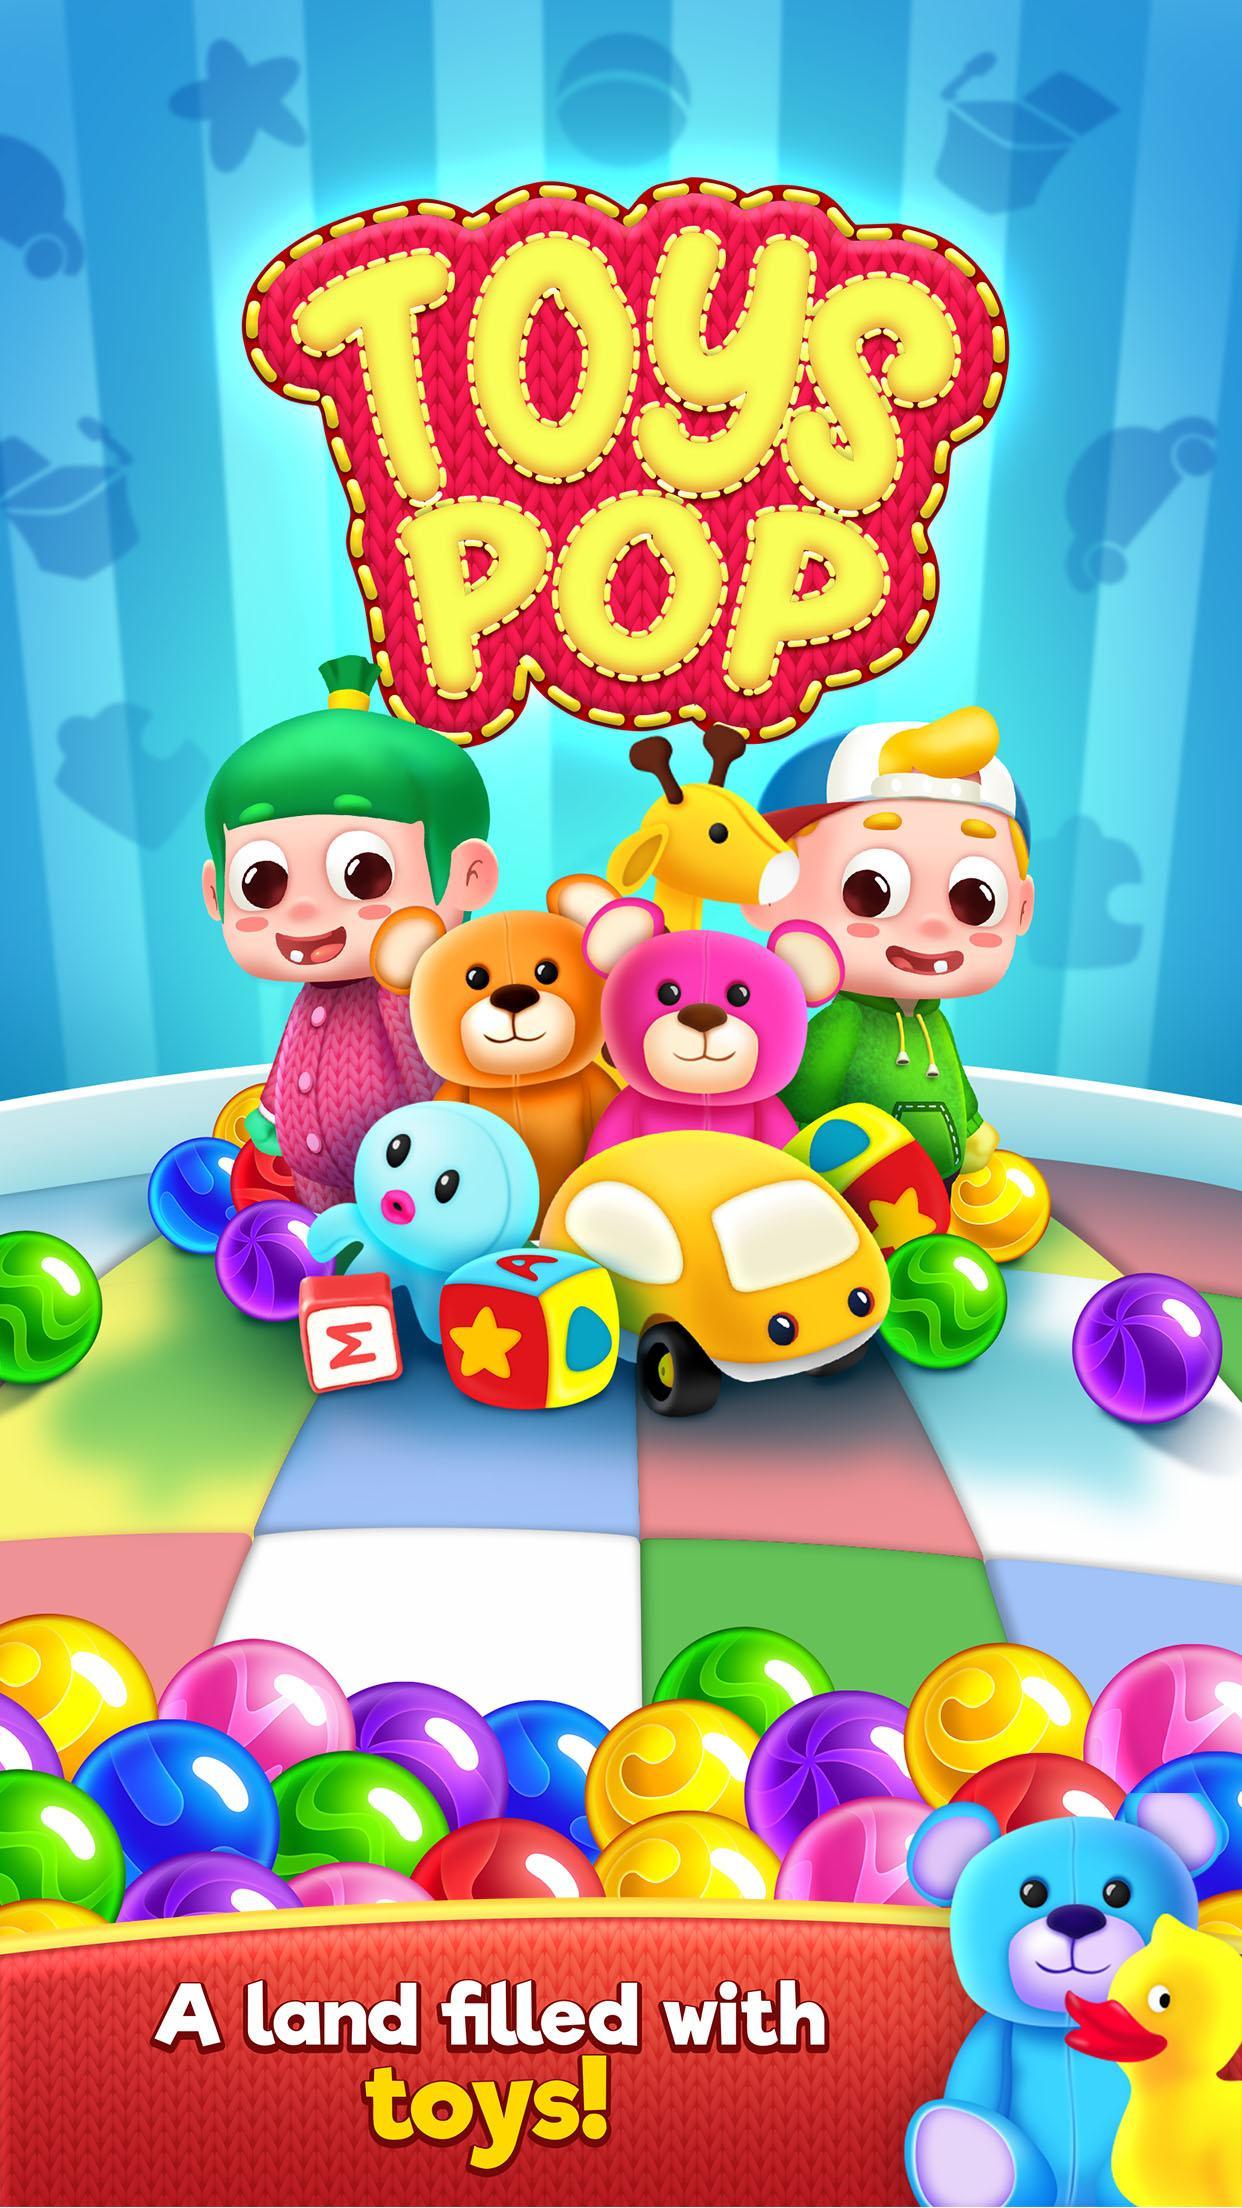 Screenshot 1 of Игрушки Pop: Bubble Shooter Games 2.8